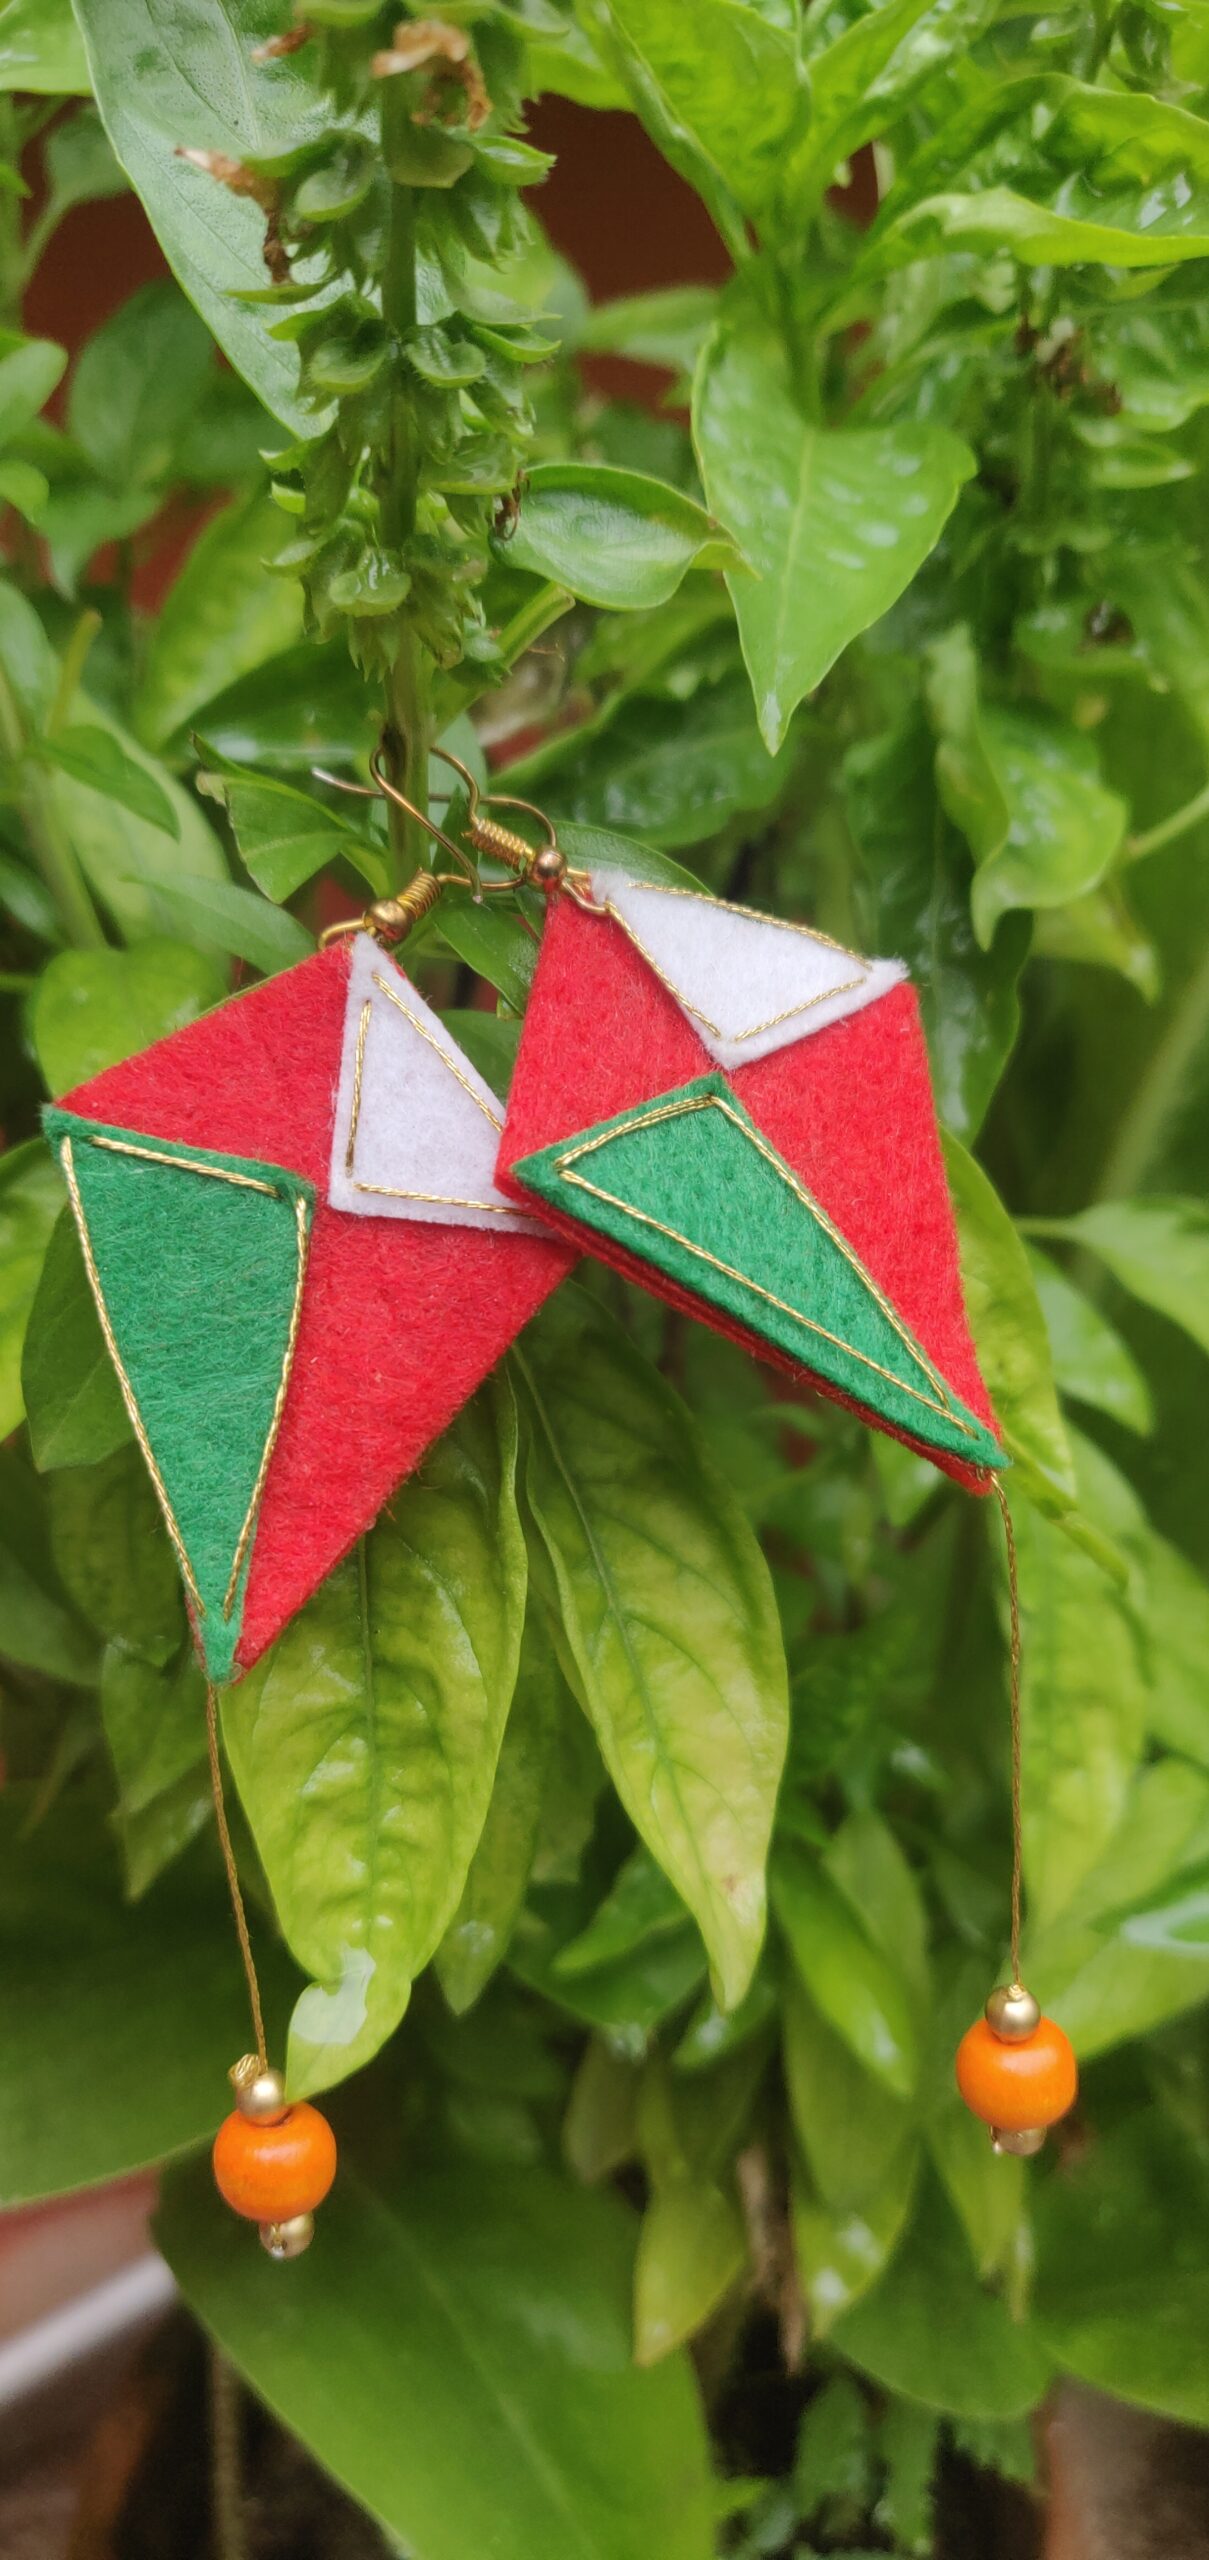 Kite Dangler Earrings in tricolor shades on branch